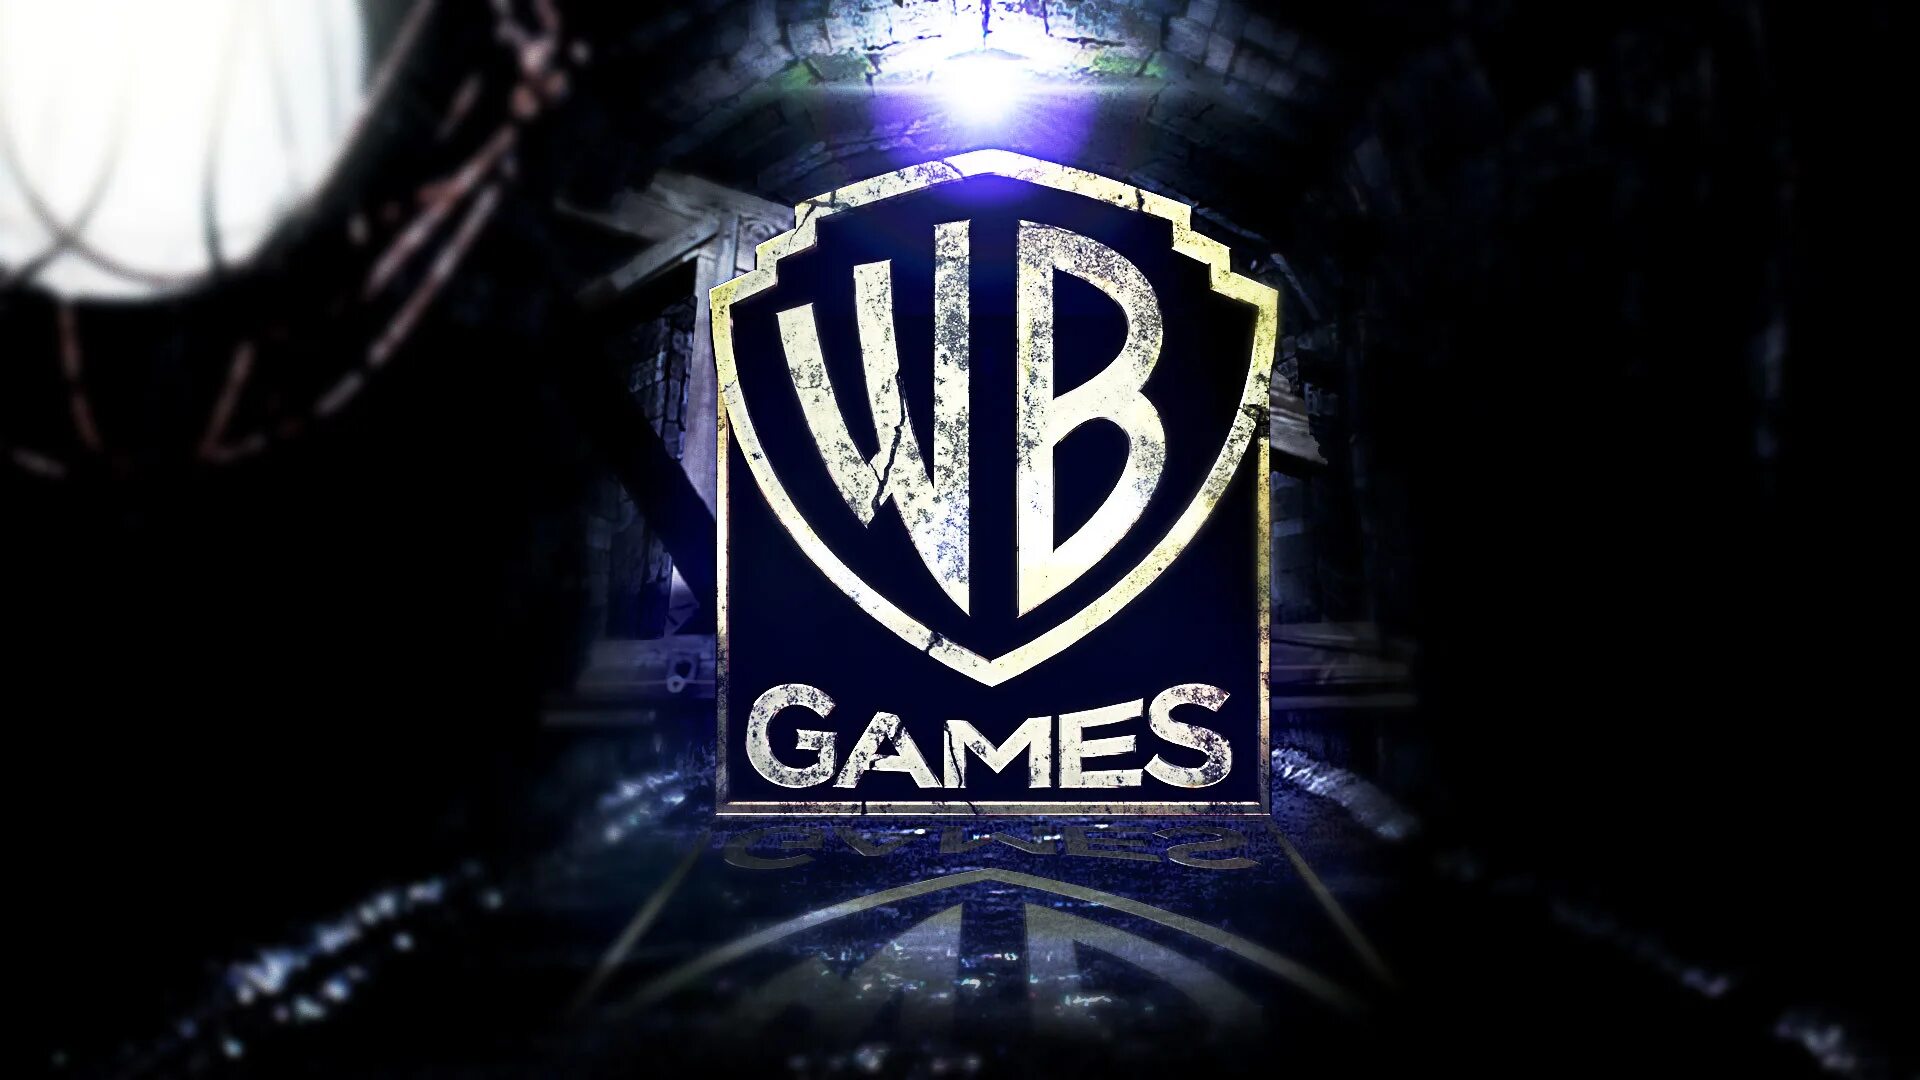 Wb games игры. WB games. Warner Bros игры. Warner Bros interactive Entertainment игры. Игровые логотипы Warner Bros.